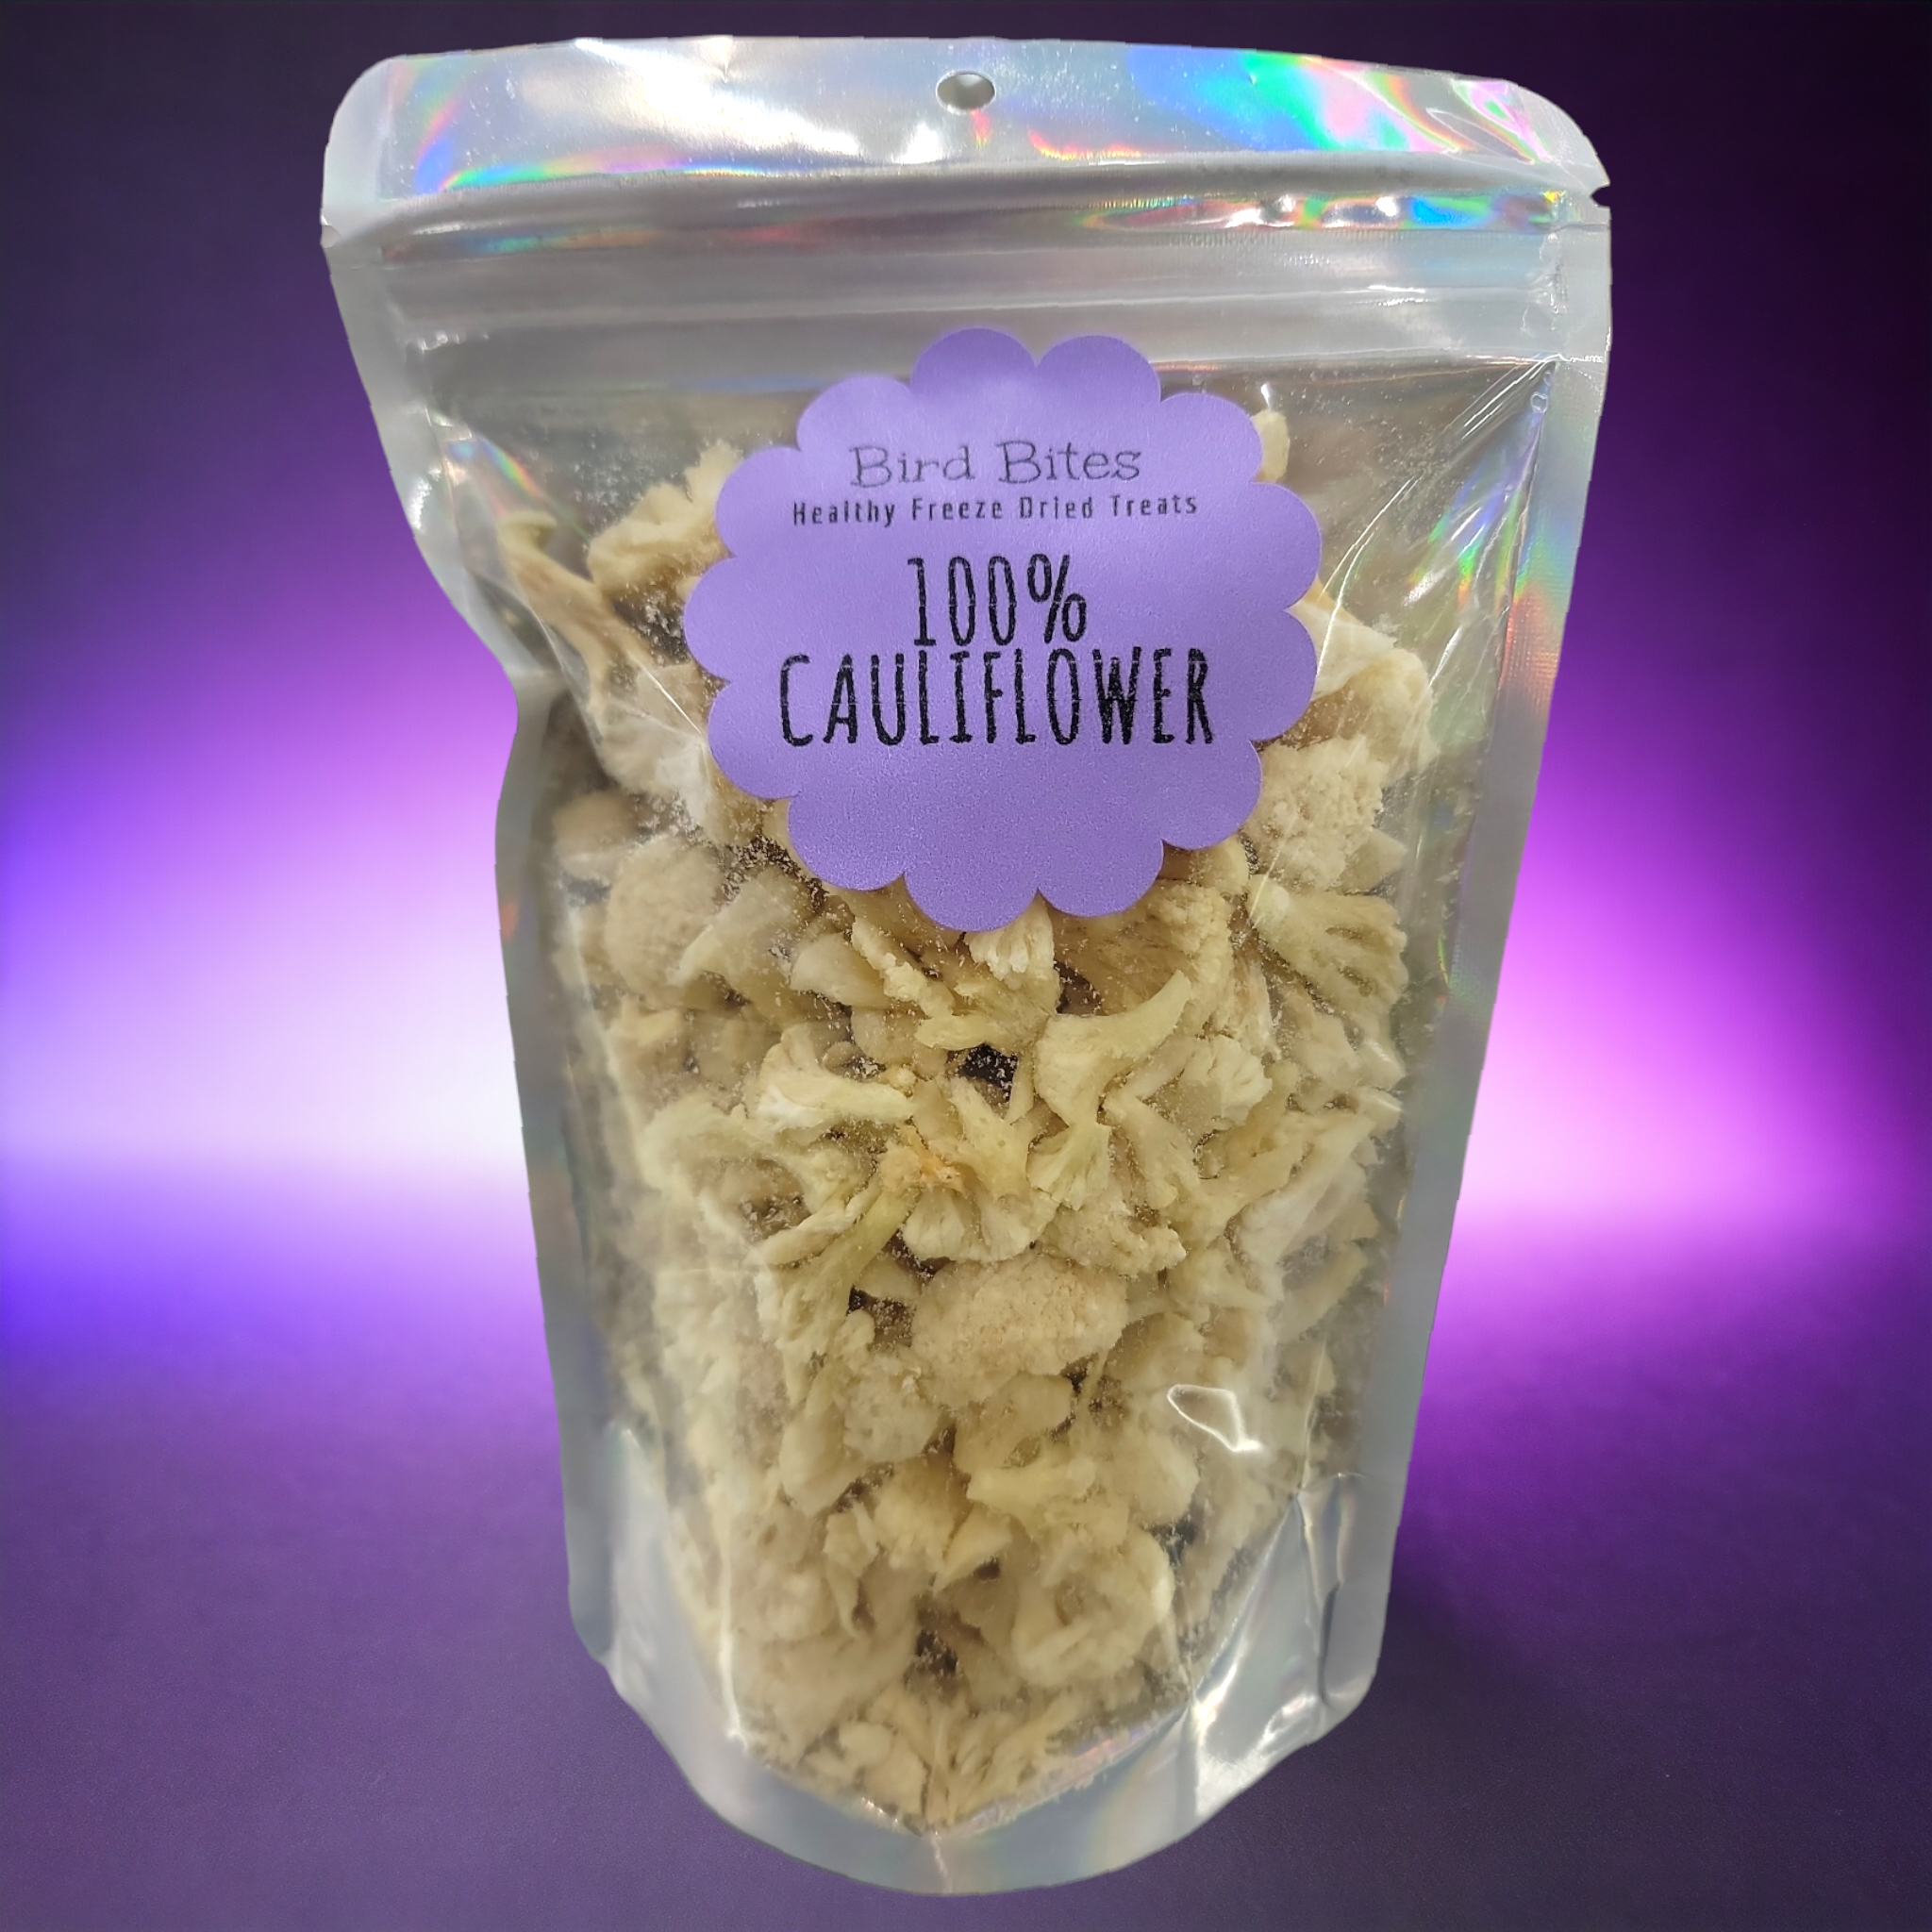 100% Cauliflower - 1.5 Cups - Bird Bites Healthy Freeze Dried Treats